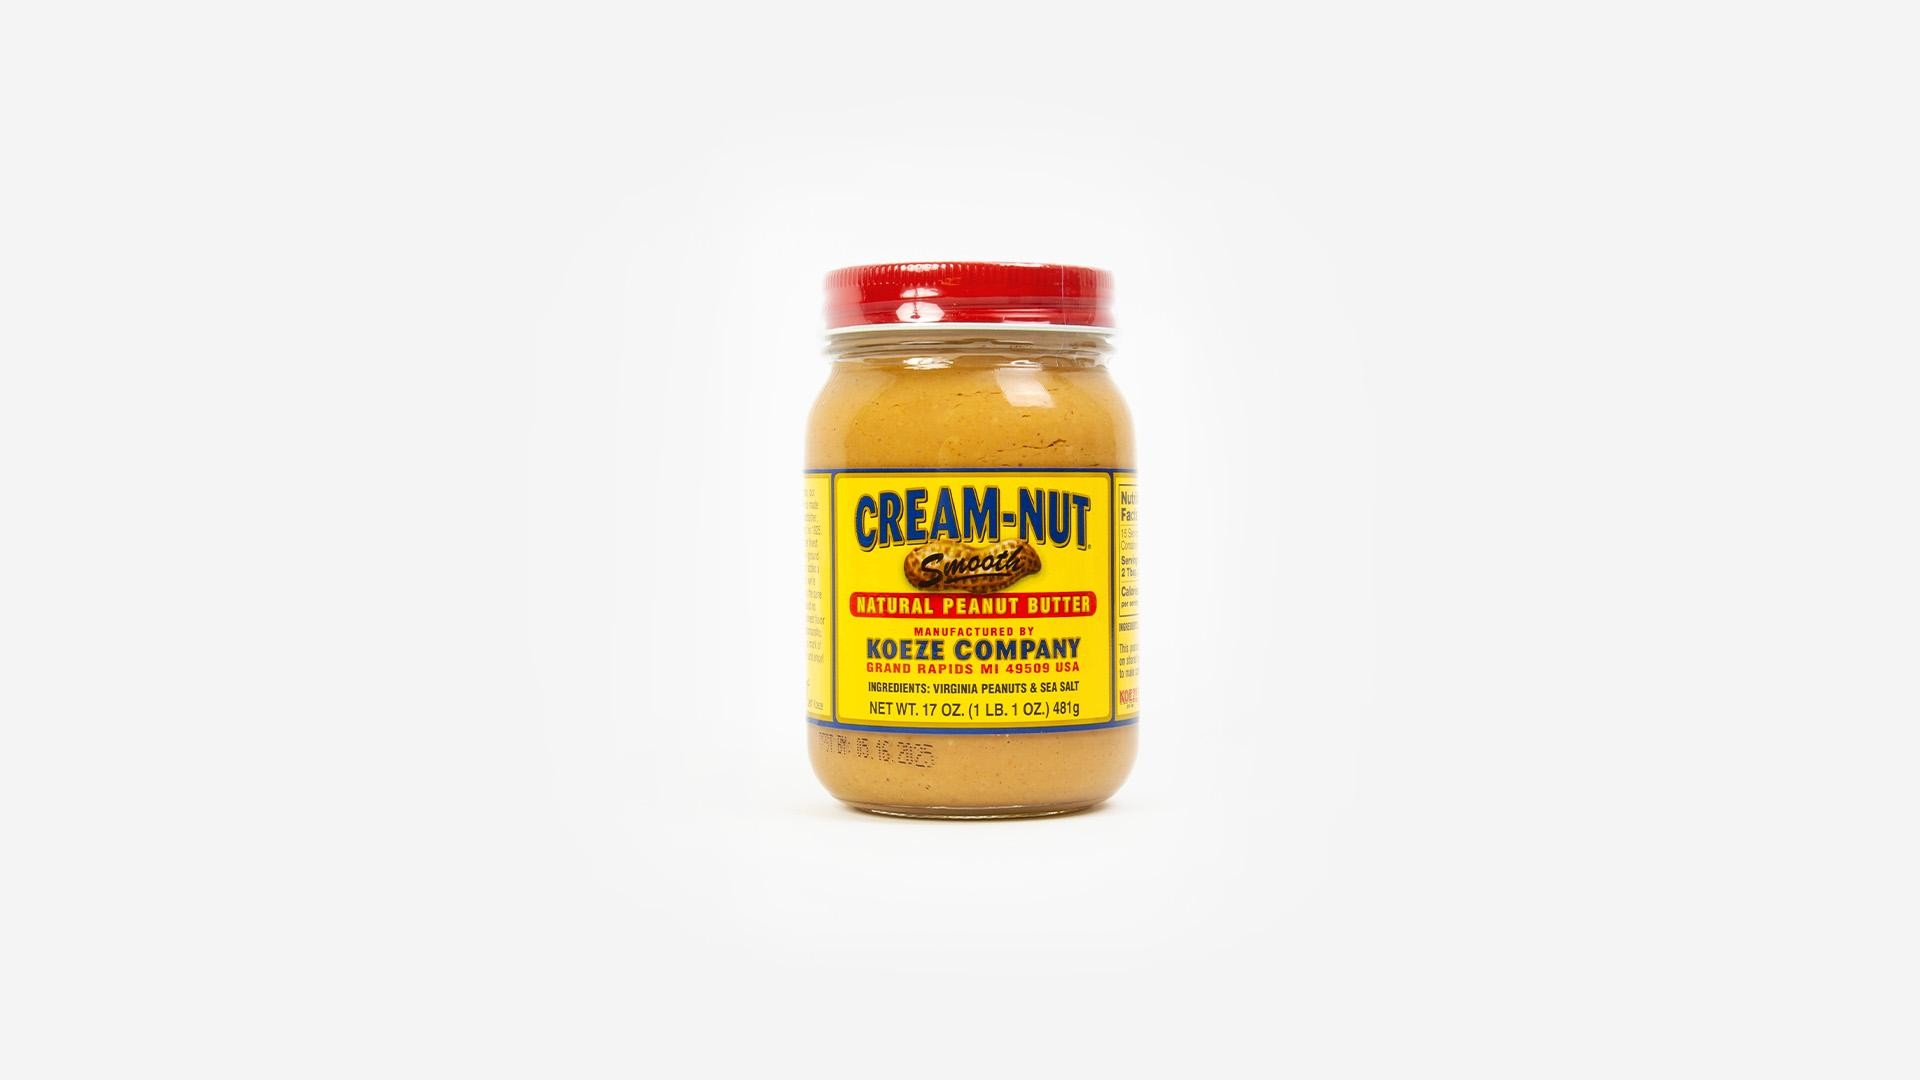 Koeze Company Cream-Nut Smooth Natural Peanut Butter